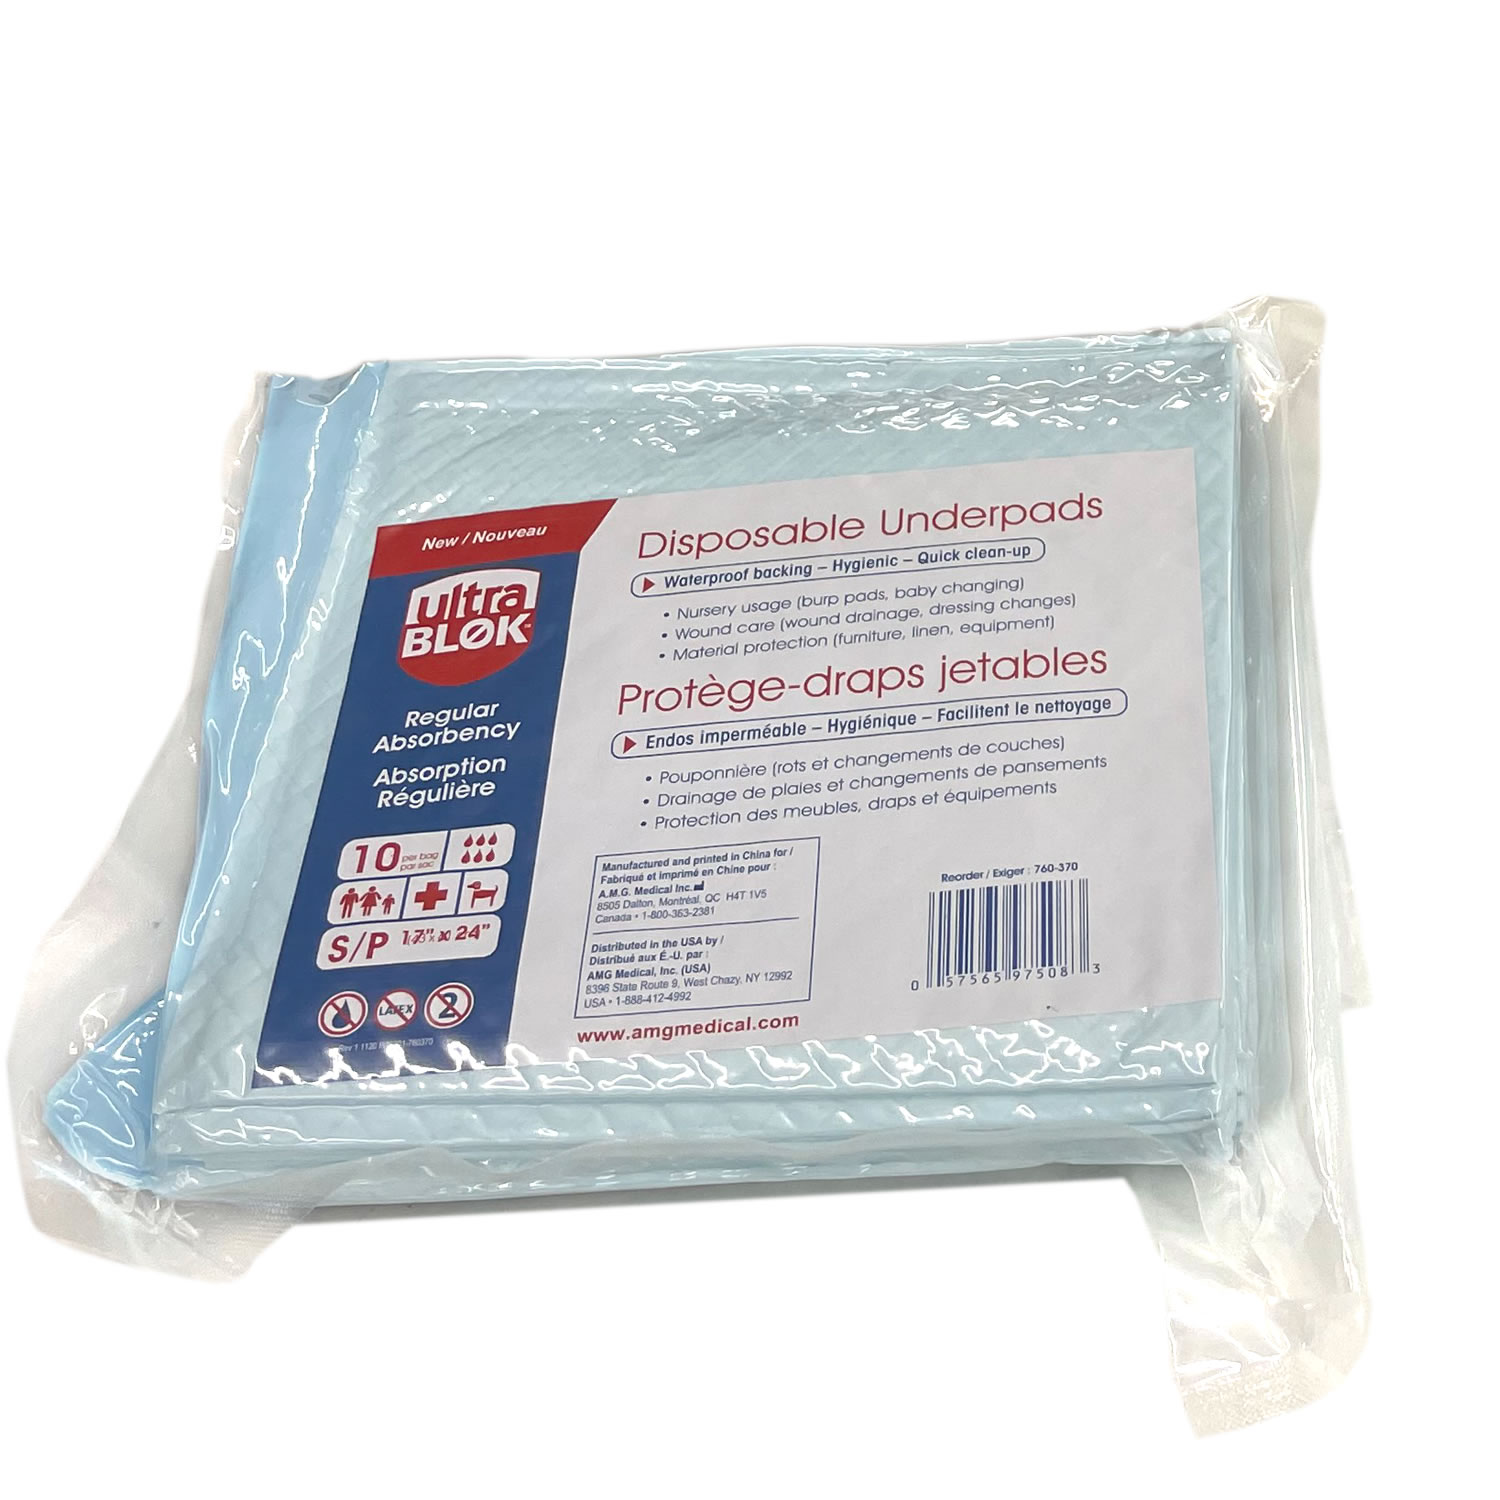 UltraBlok™ UltraBlok™ Disposable Underpads, Regular absorbency